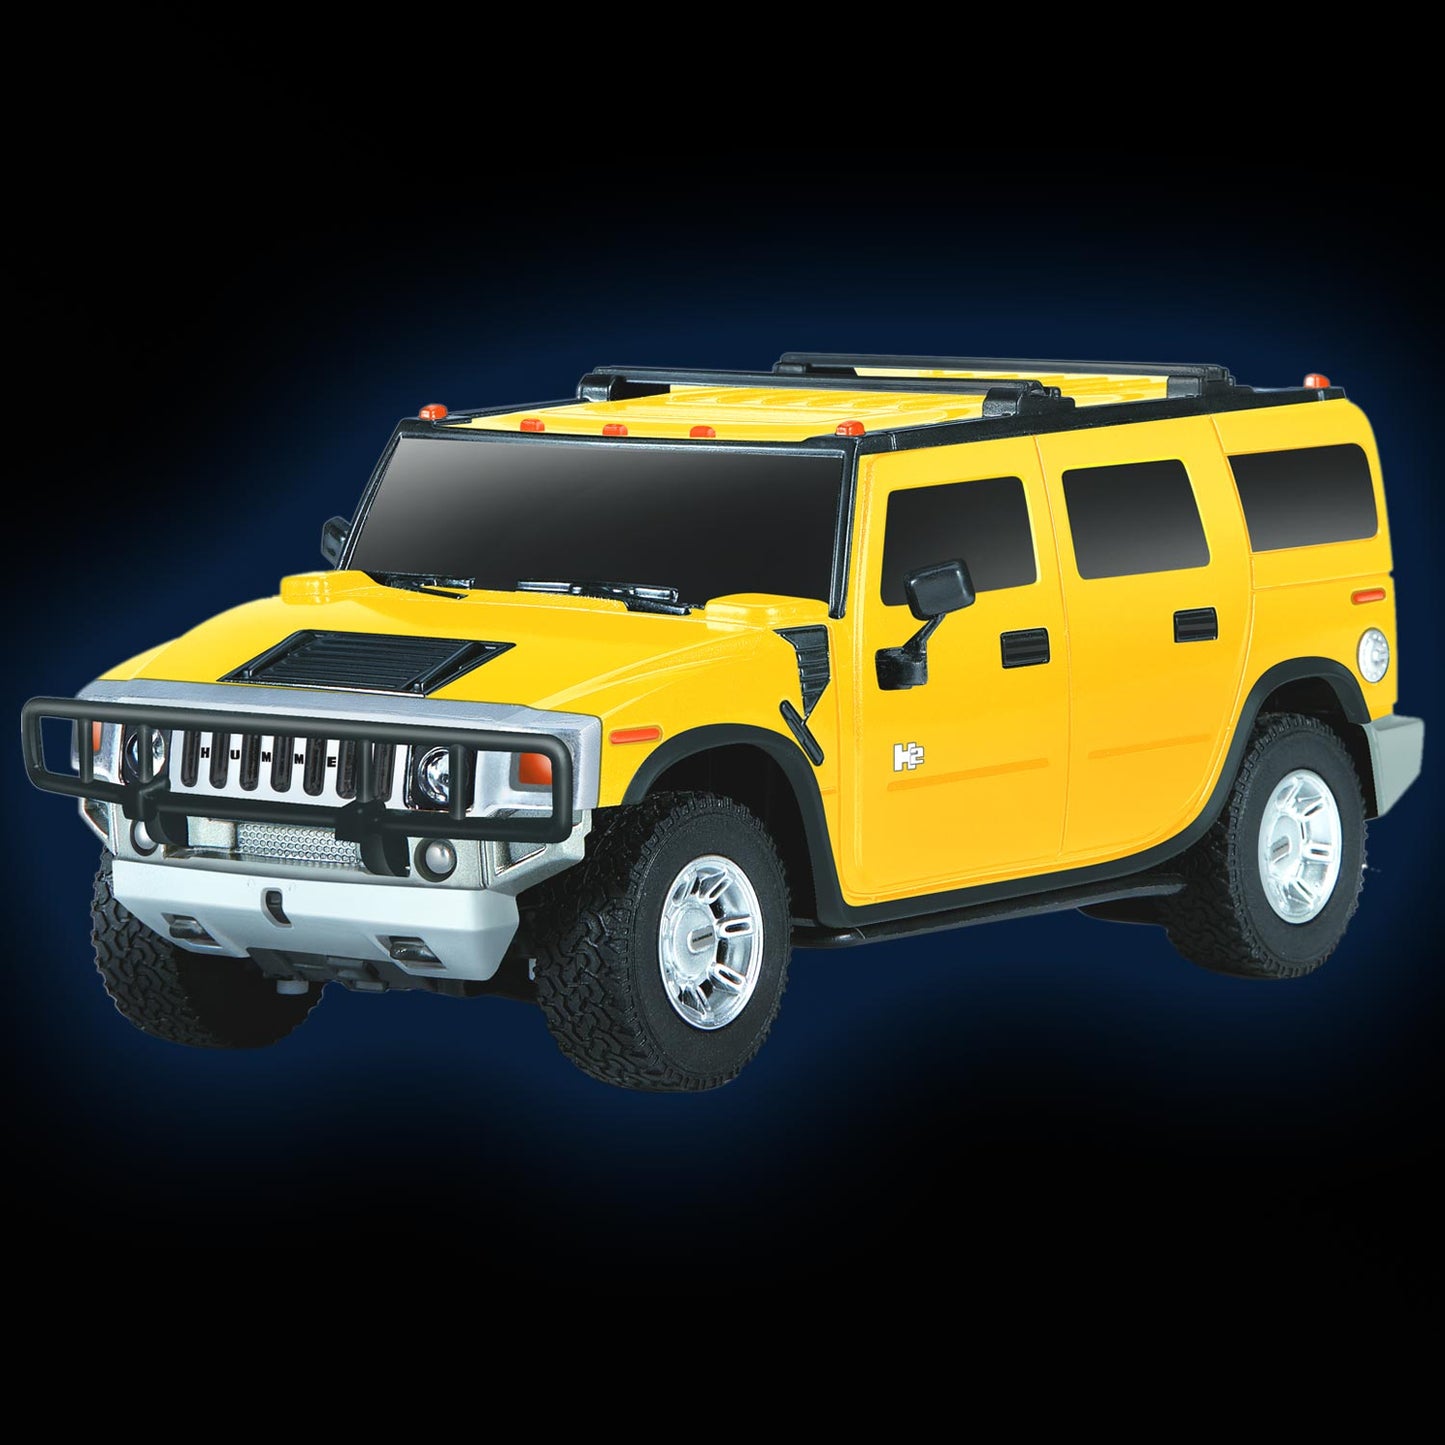 Hummer H2 SUV~Yellow